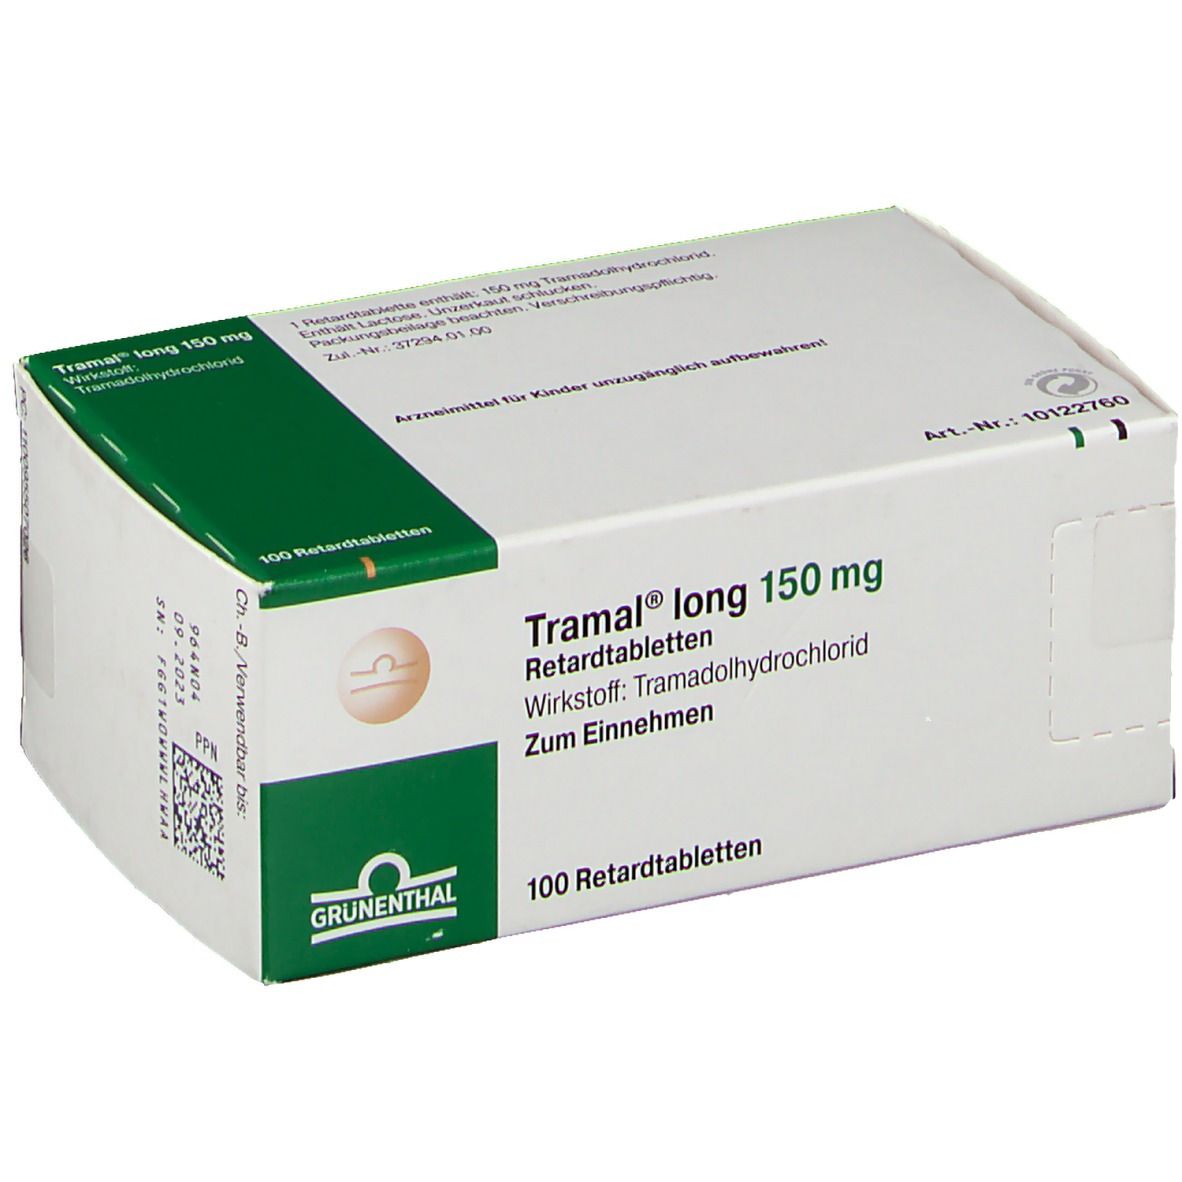 Tramal® long 150 mg